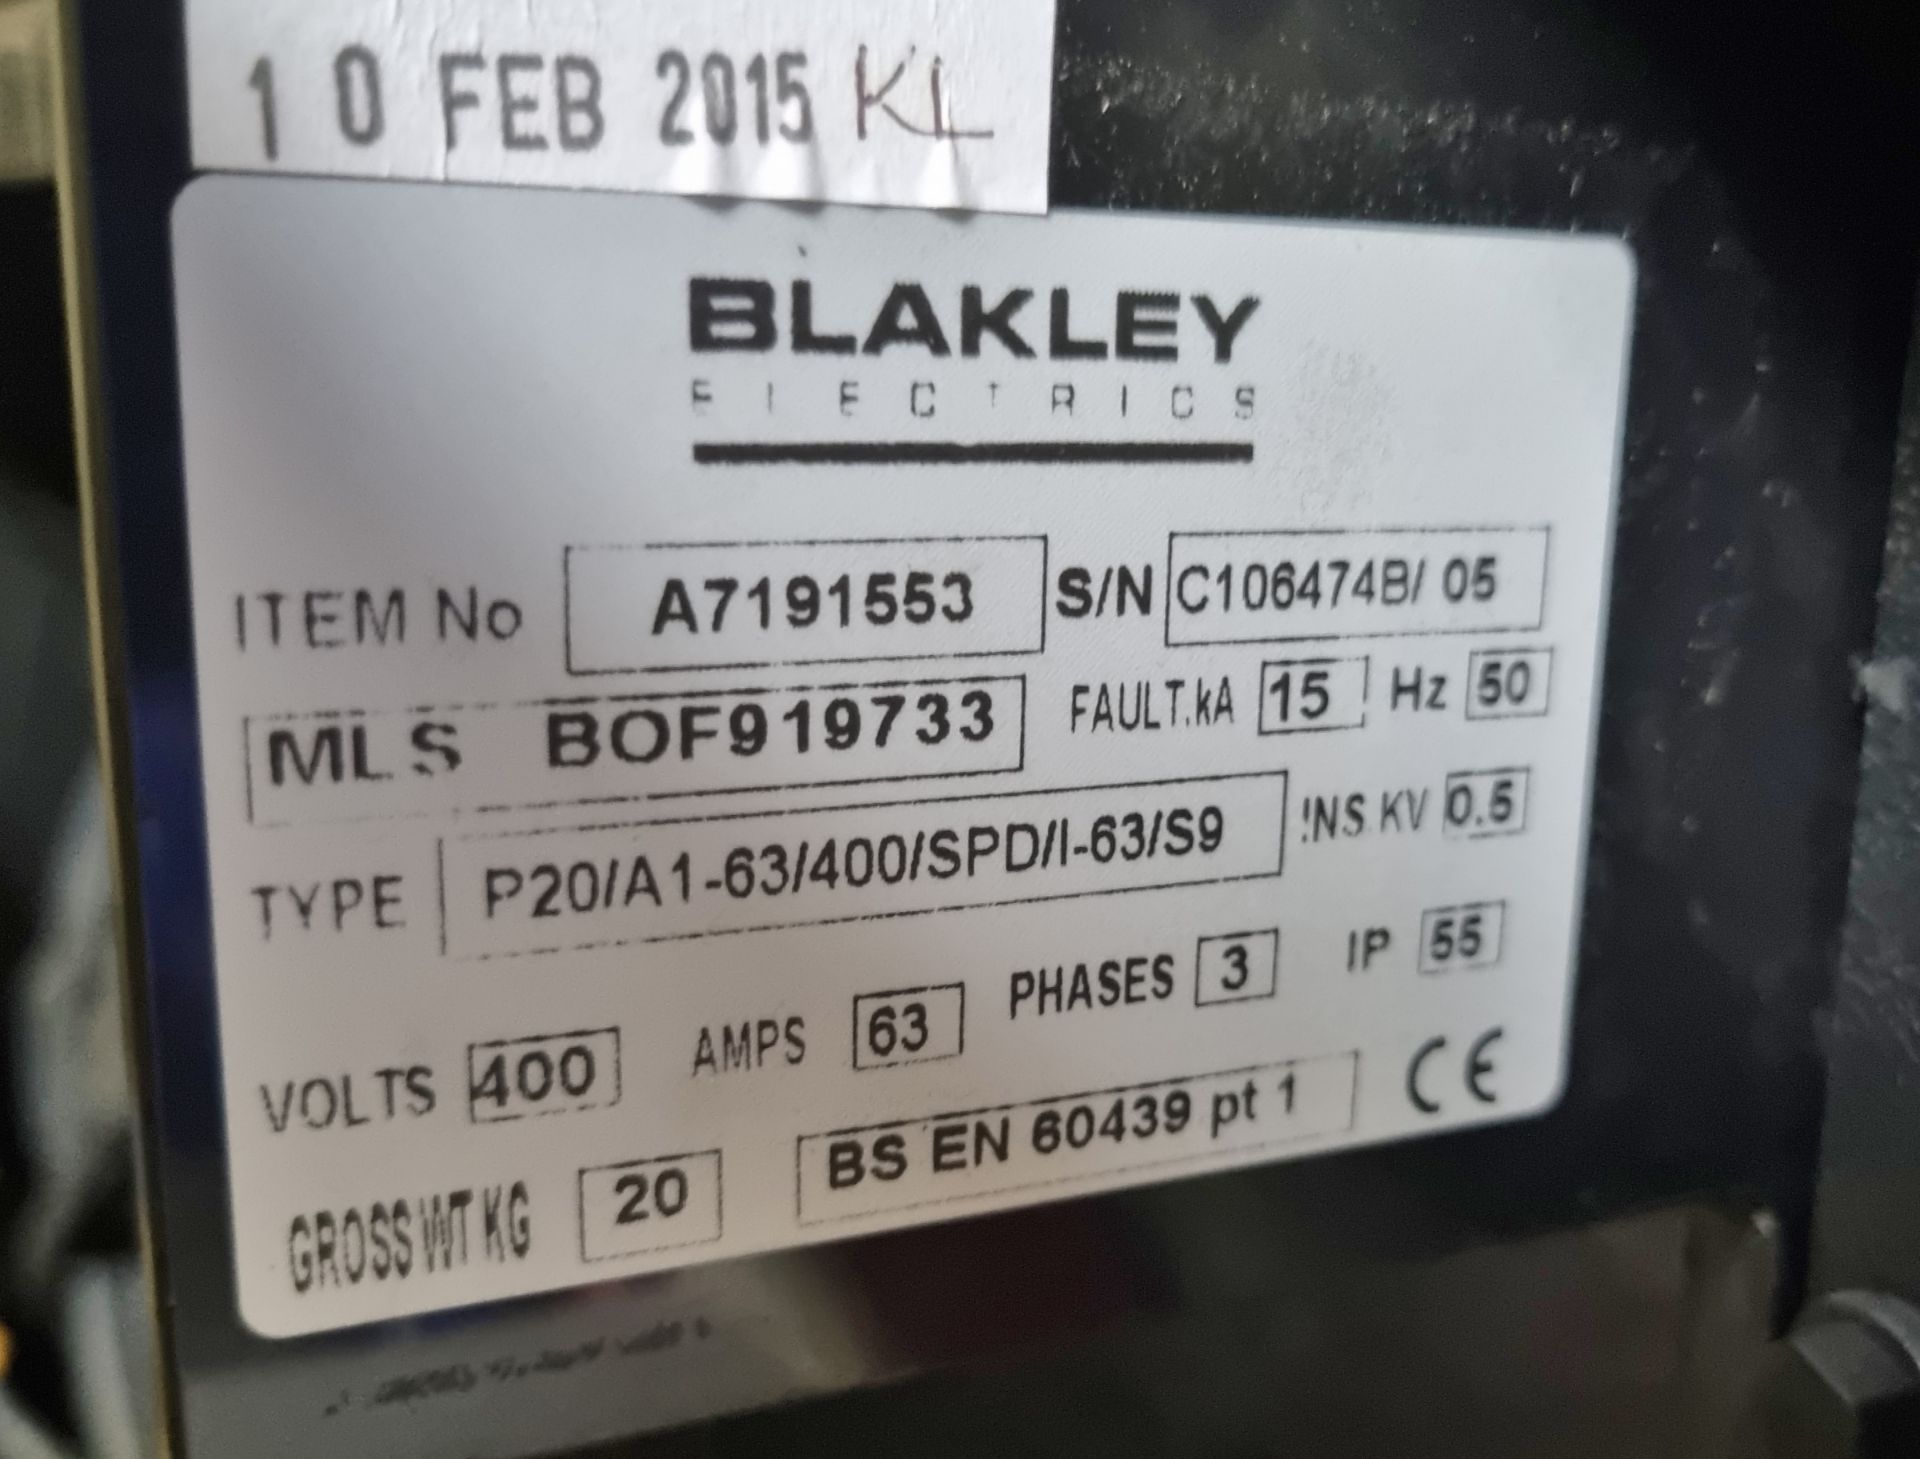 Blakley Electrics P20/A1-63/400/SPD/I-63/S6 power distribution box - 400V - 63A - 3ph - 50hz - Image 3 of 3